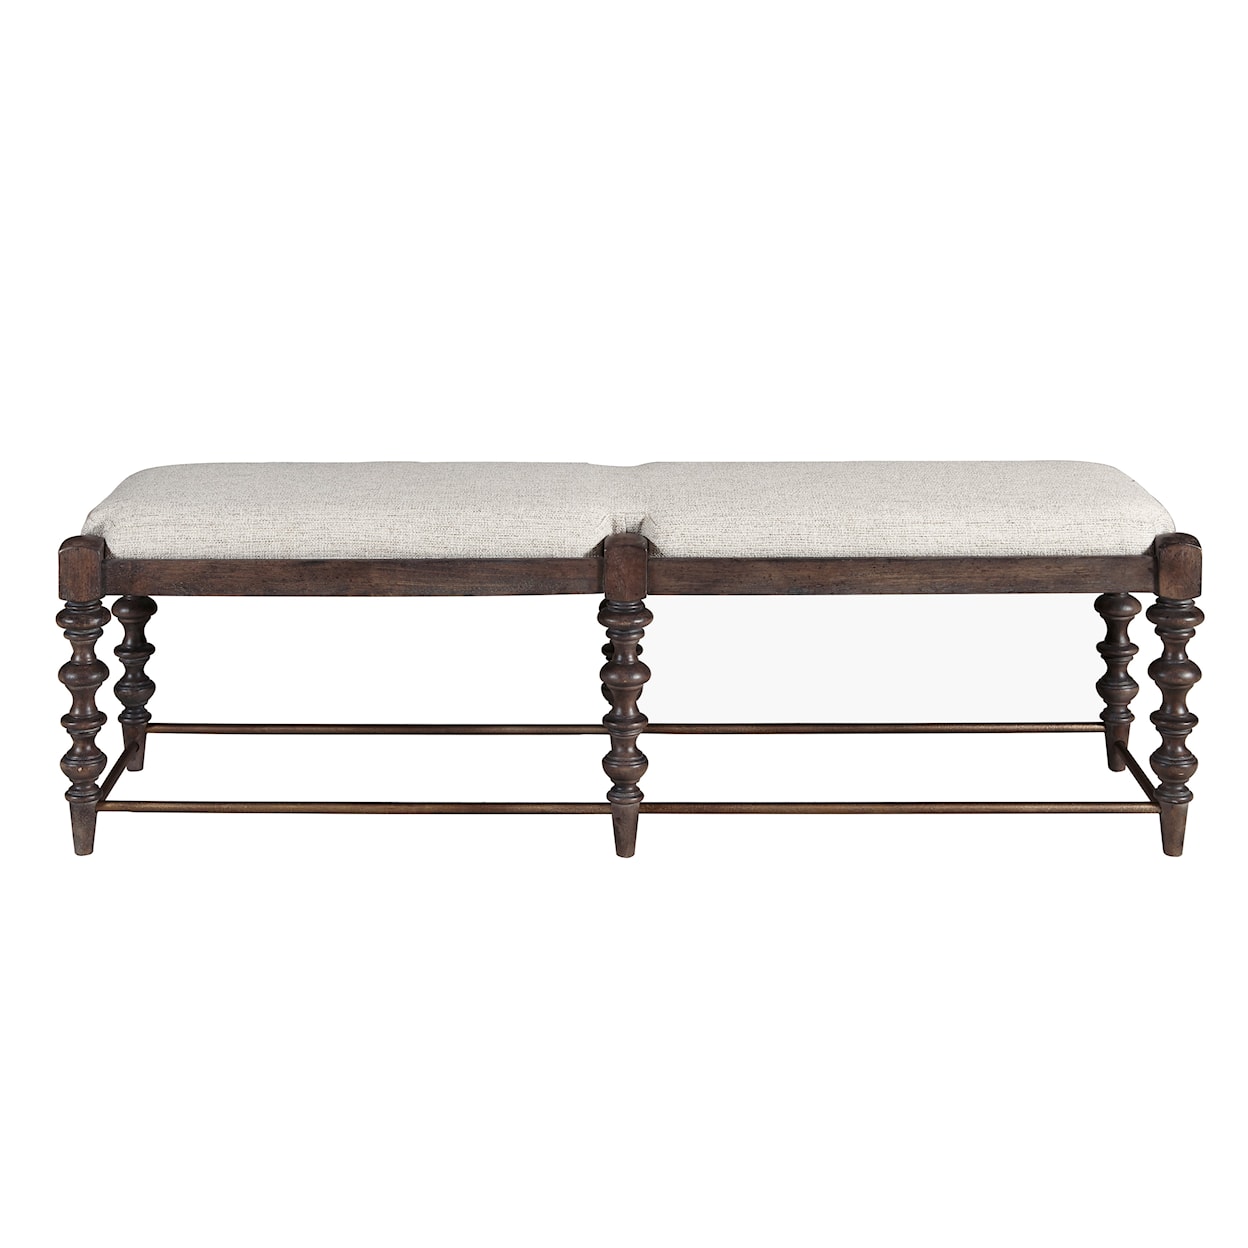 Pulaski Furniture Revival Row Upholstered Bed Bench